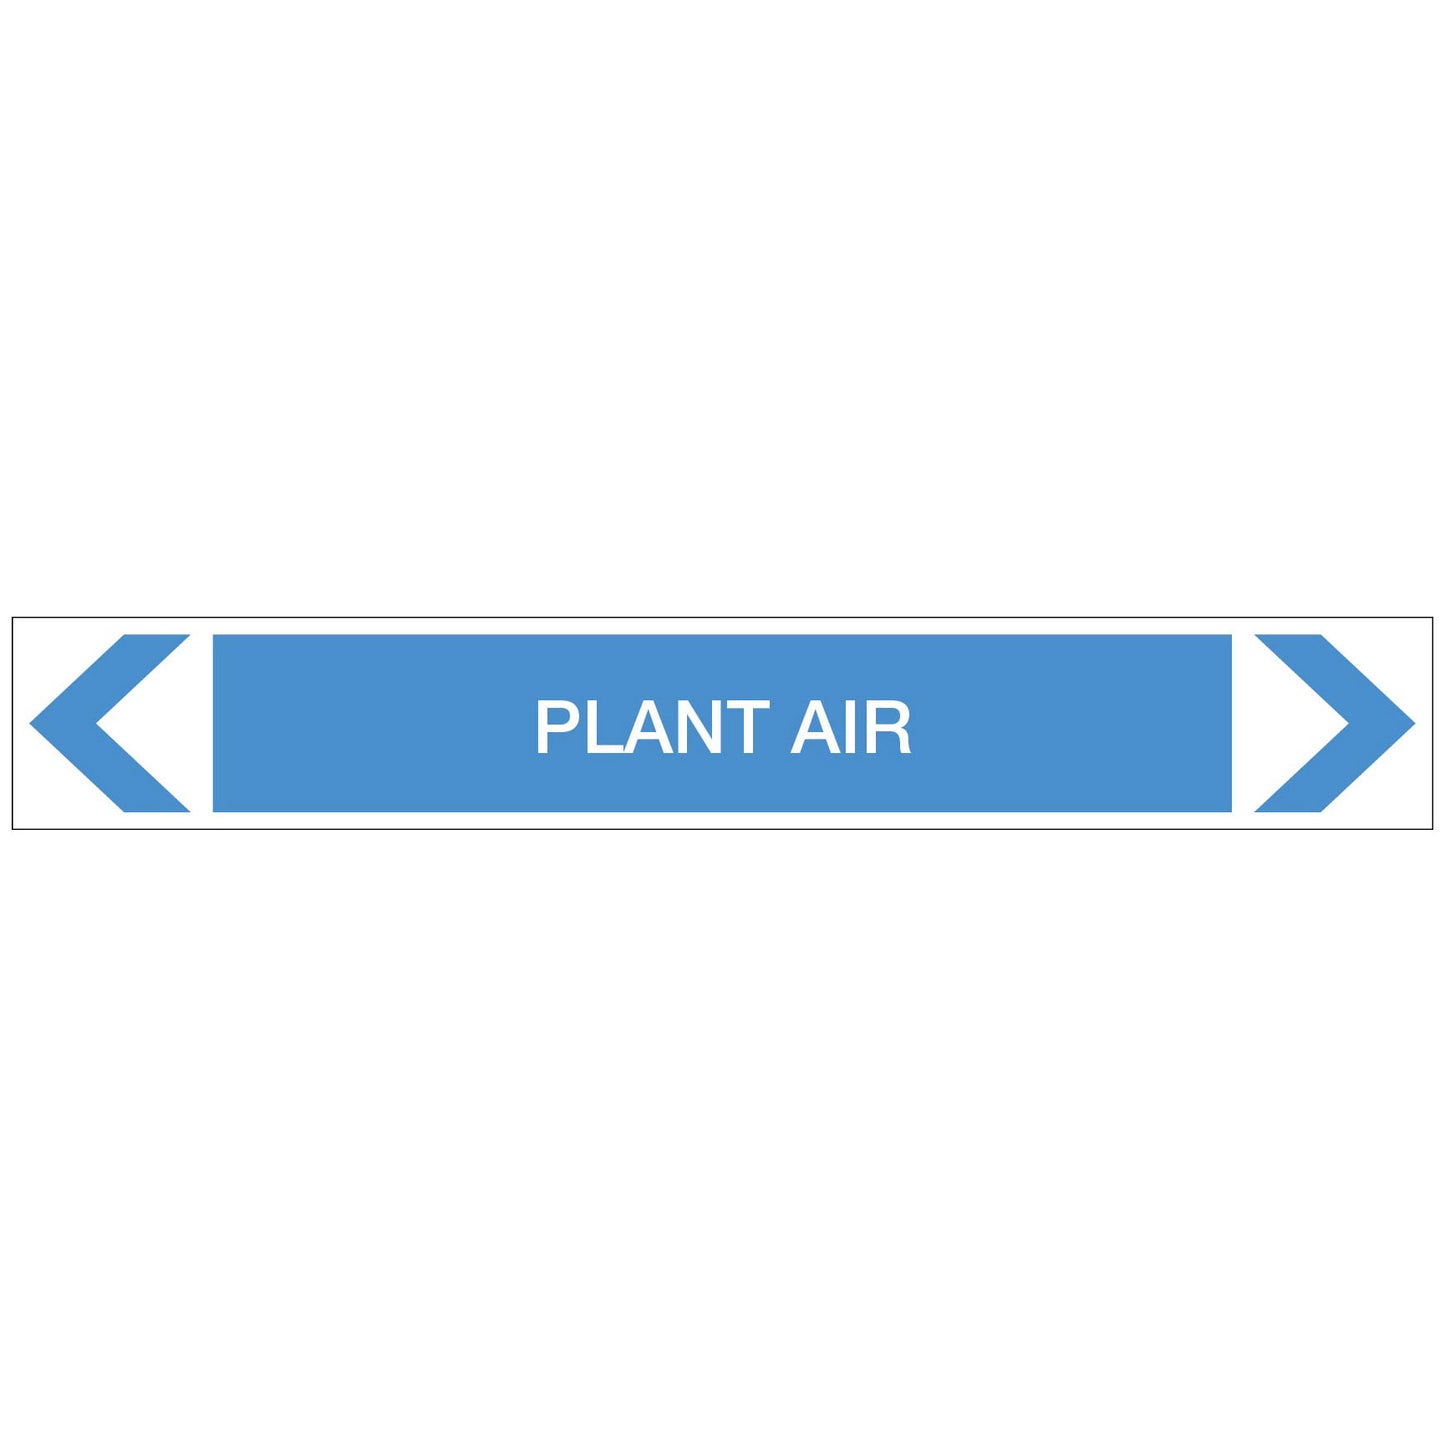 Air - Plant Air - Pipe Marker Sticker